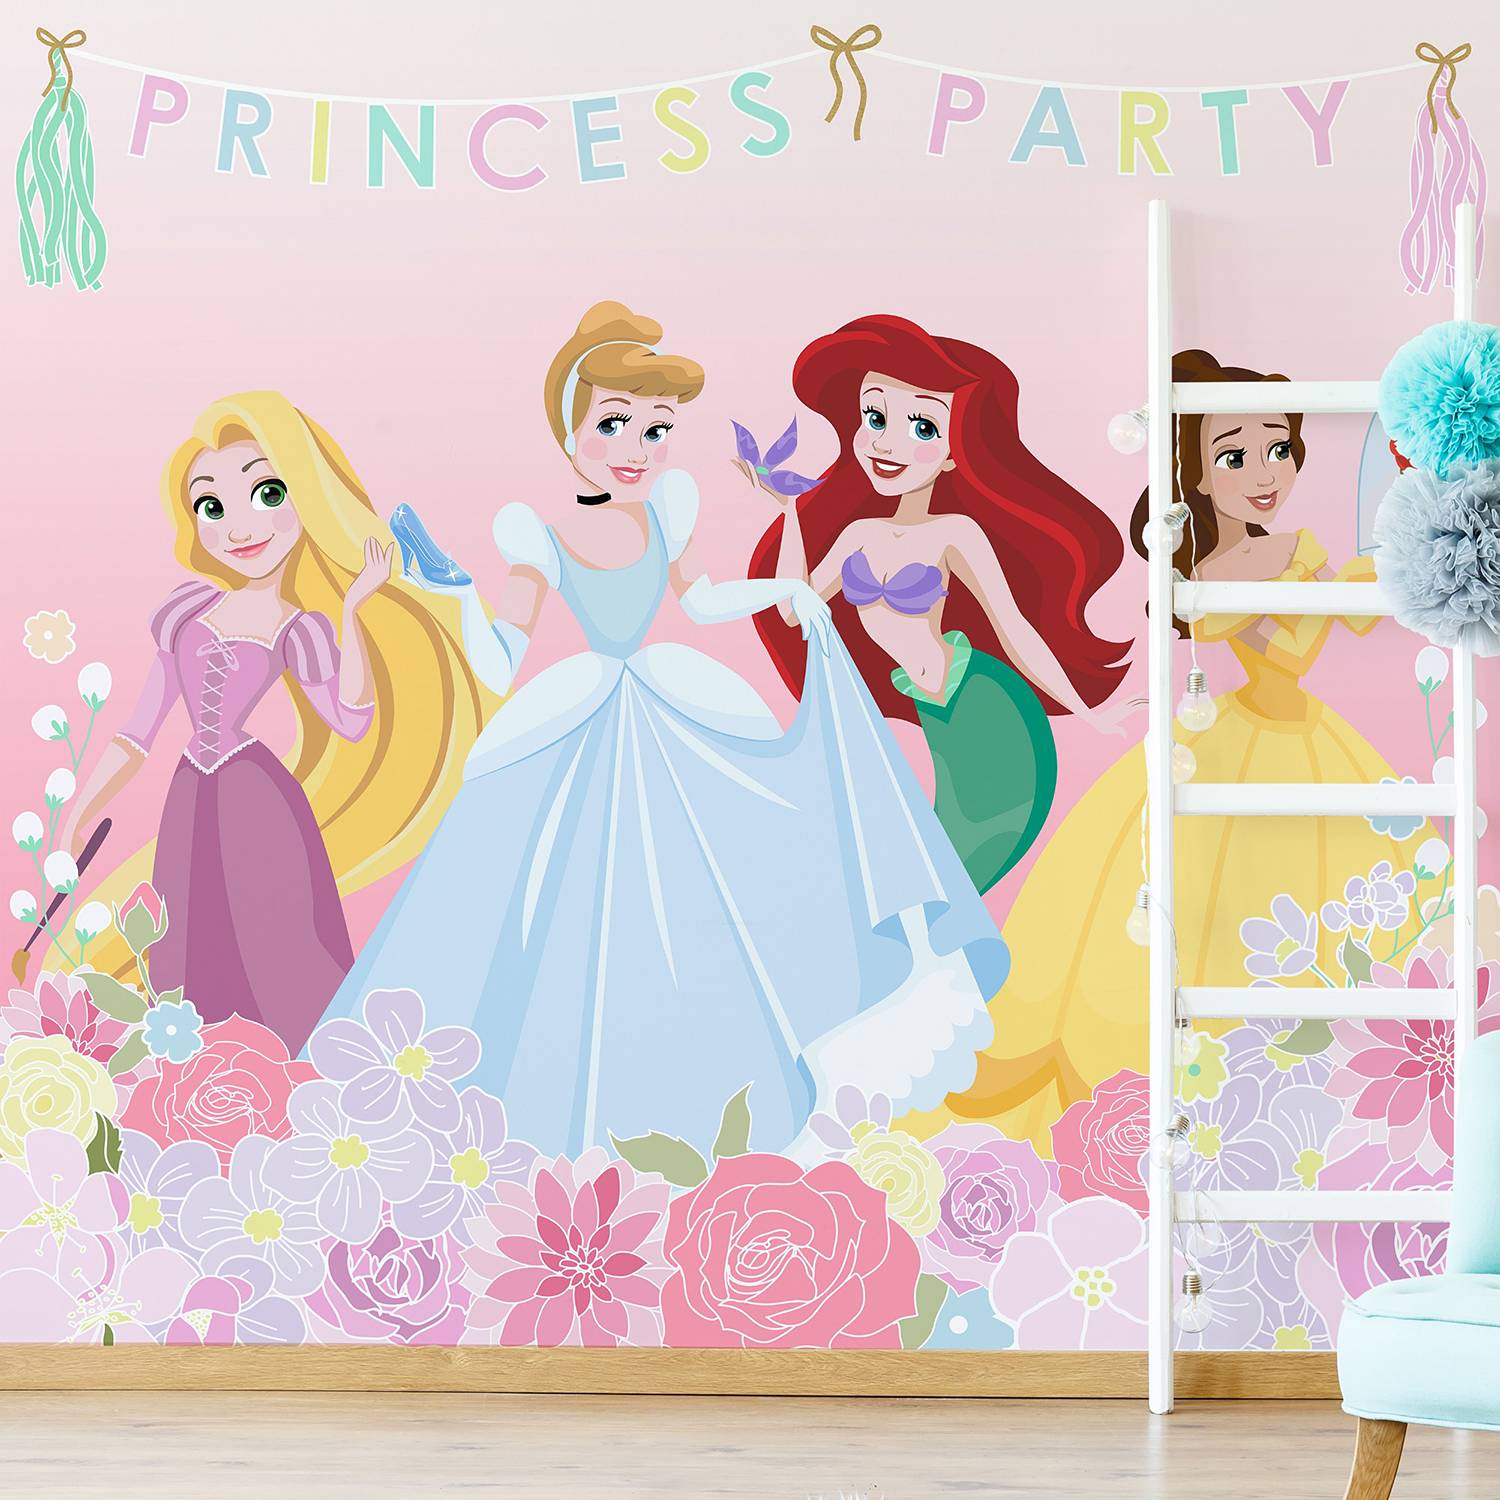 Fototapete Disney Princess Party von Disney